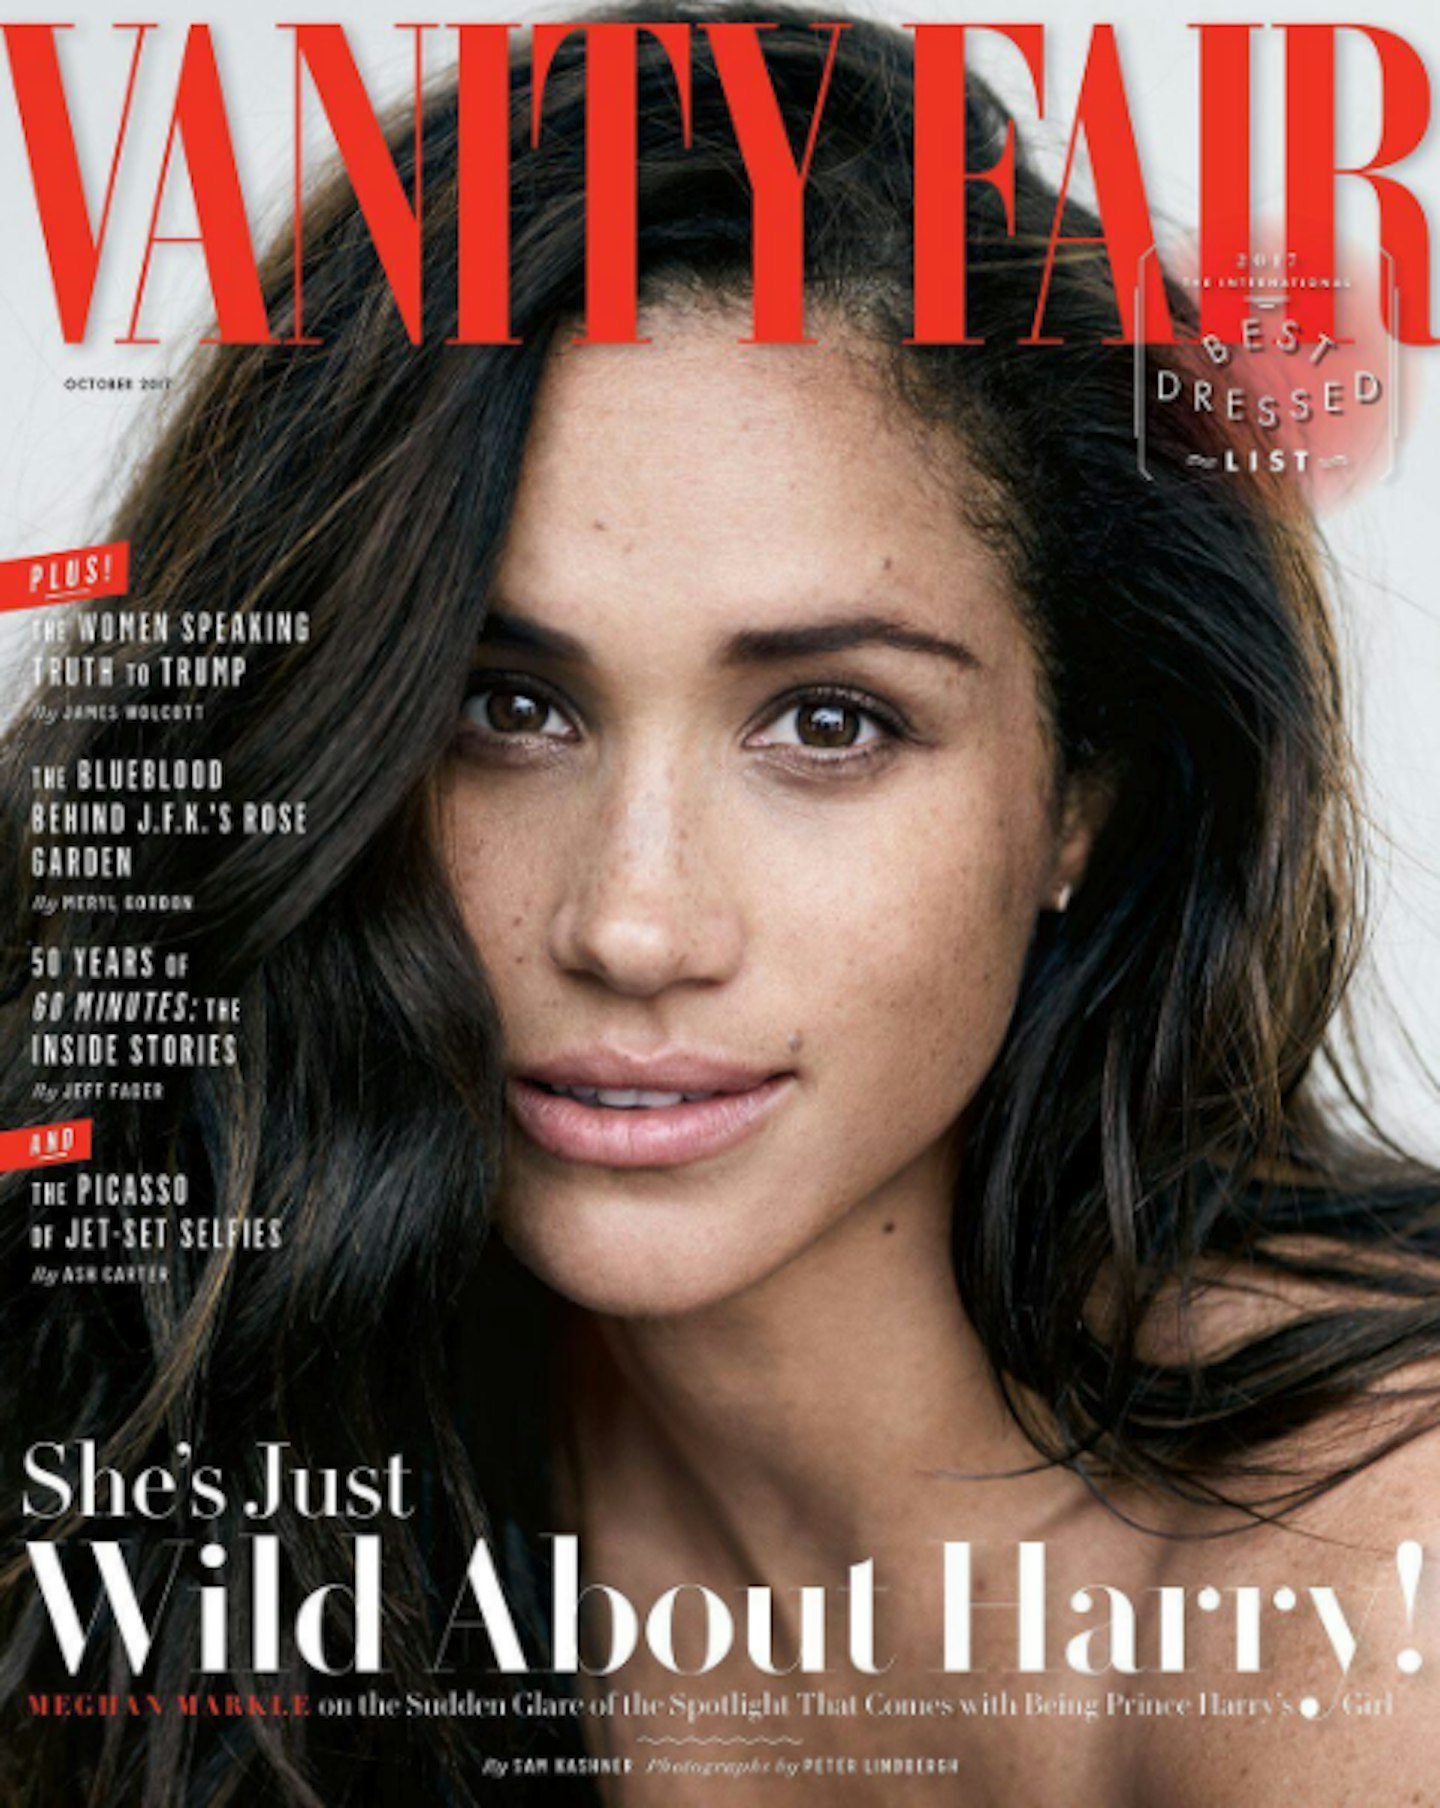 Meghan Markle appears on cover of Vanity Fair